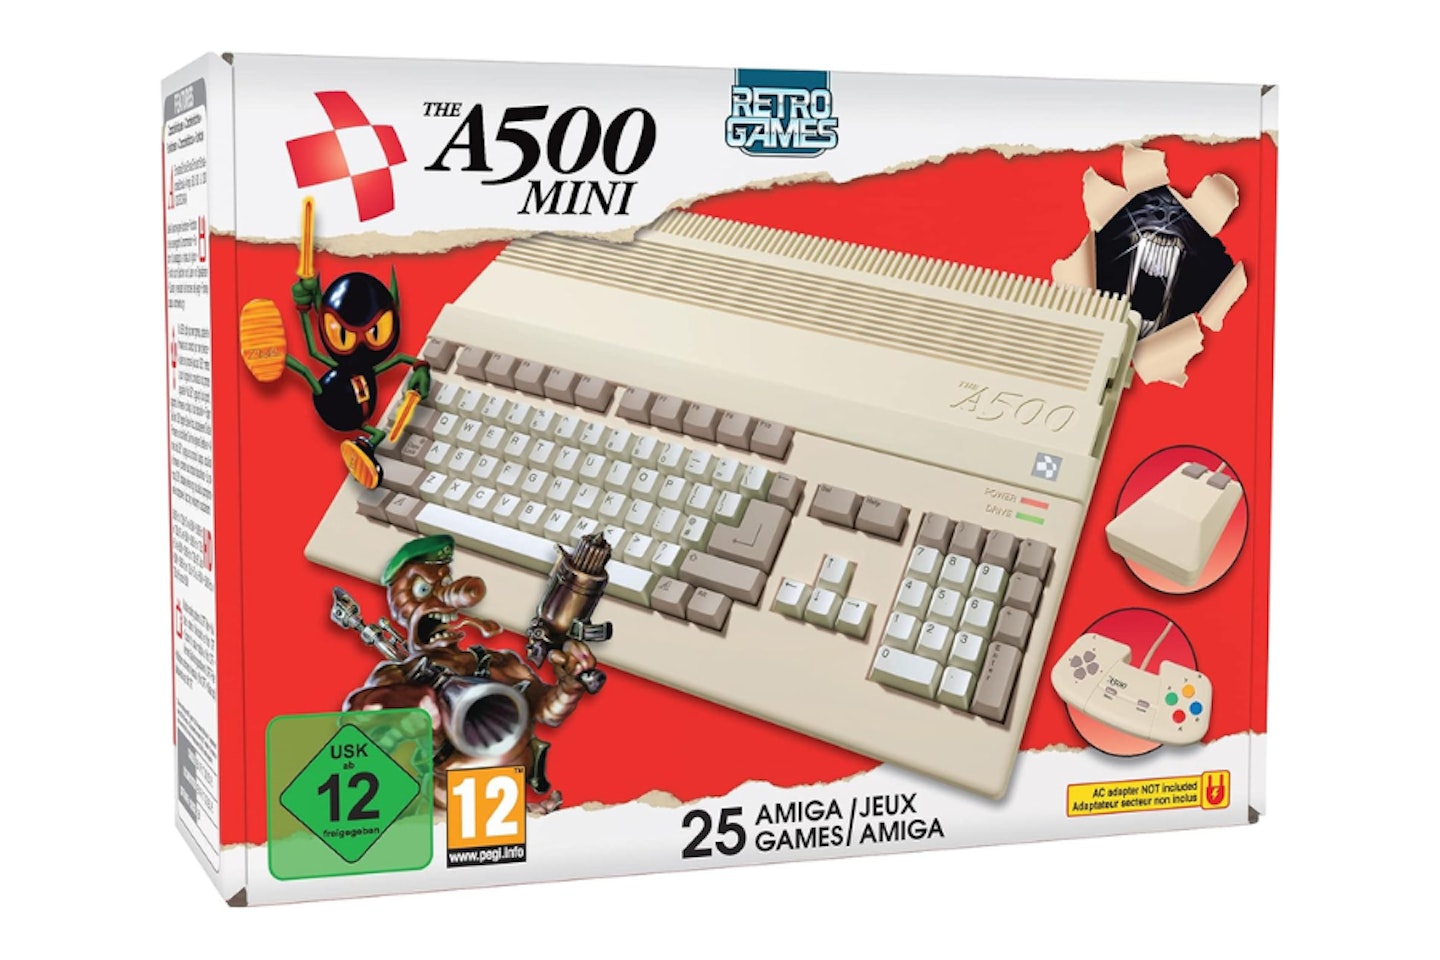 Amiga A500 Mini  - one of the best mini consoles